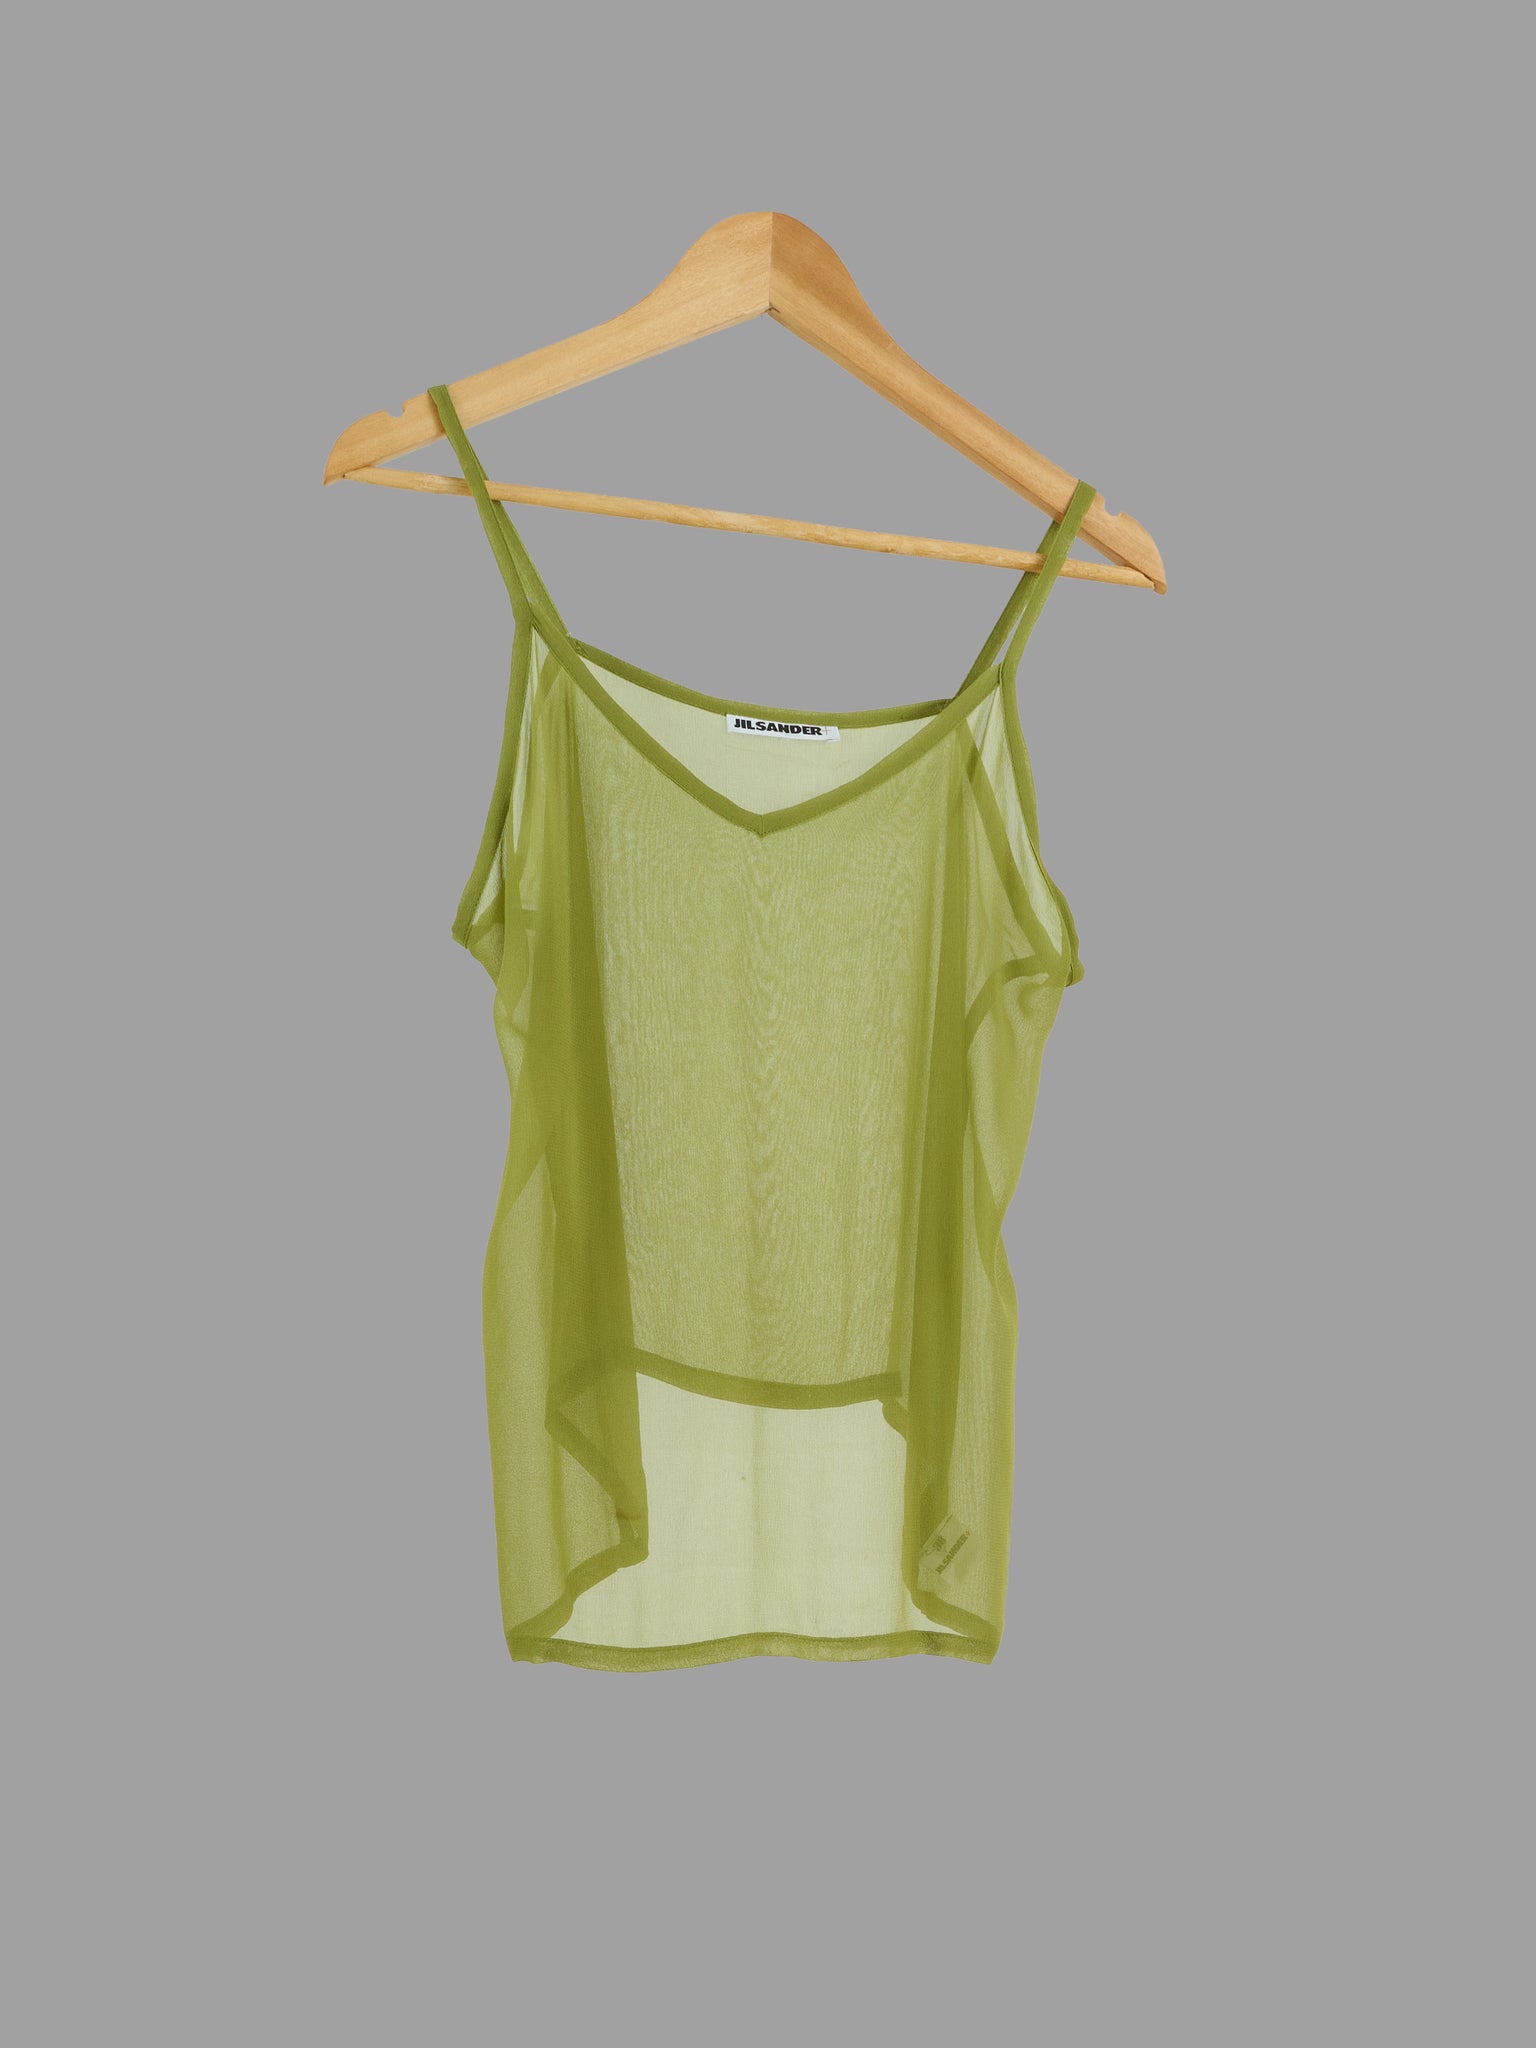 Jil Sander 1980s green sheer viscose camisole top - womens size 38